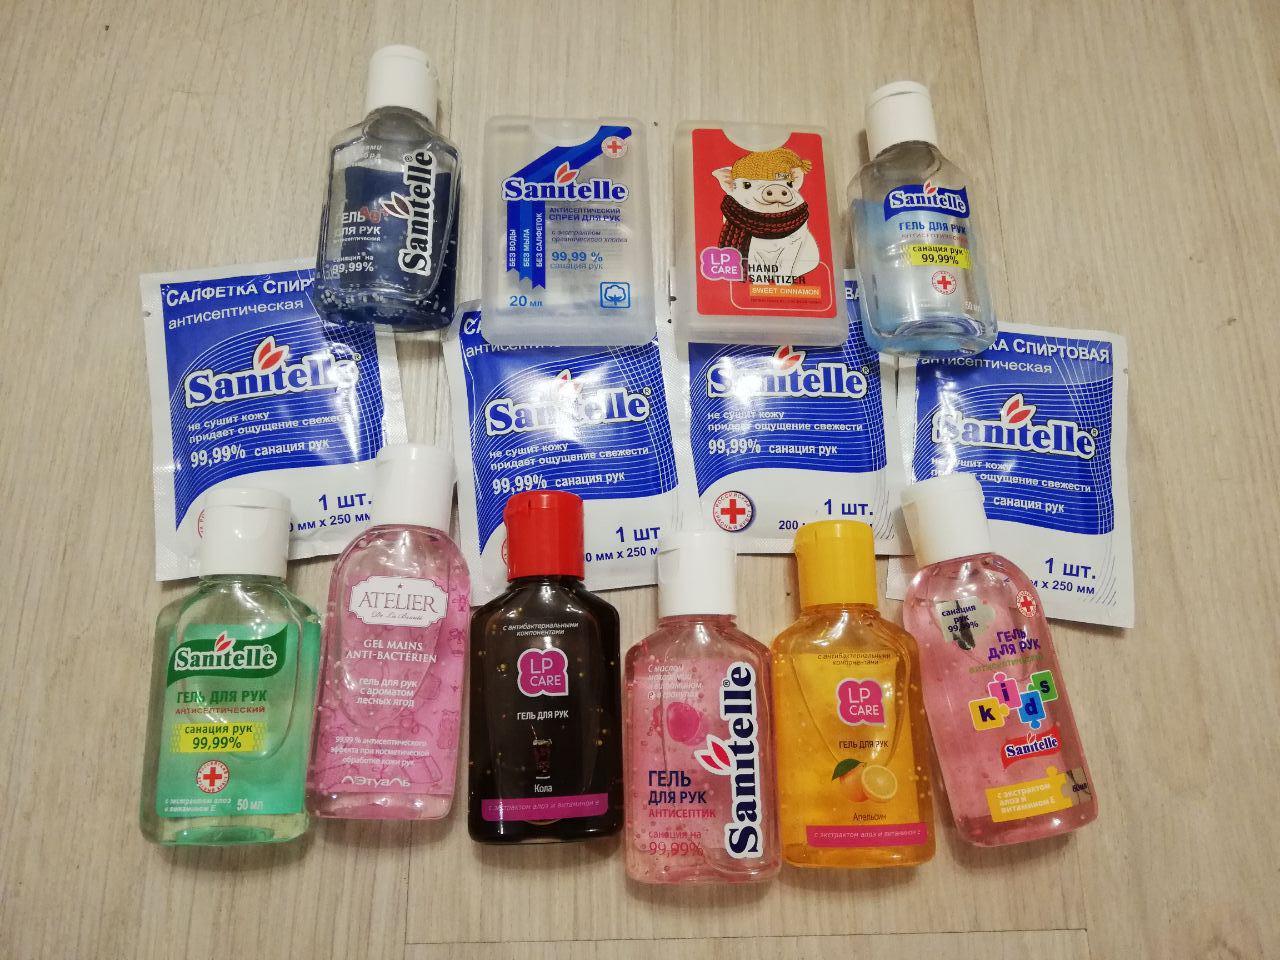 Non-Japanese soap. exposure - My, Longpost, Exposure, Japan, Soap, Package, Marketing